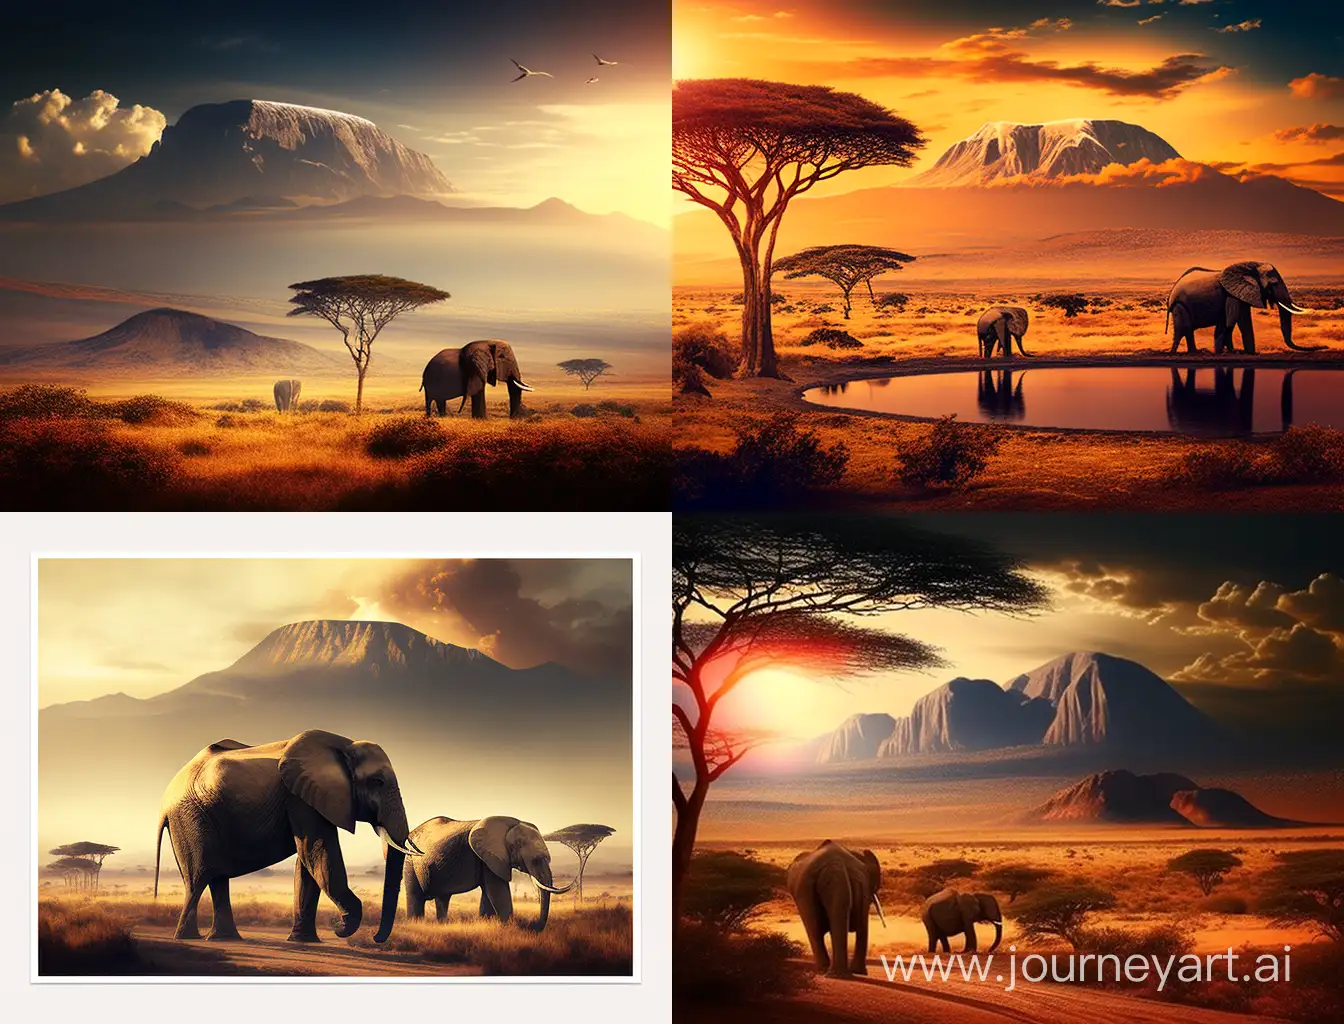 Majestic-Mount-Kenya-Landscape-with-Elephants-under-a-Warm-Glowing-Savannah-Sun